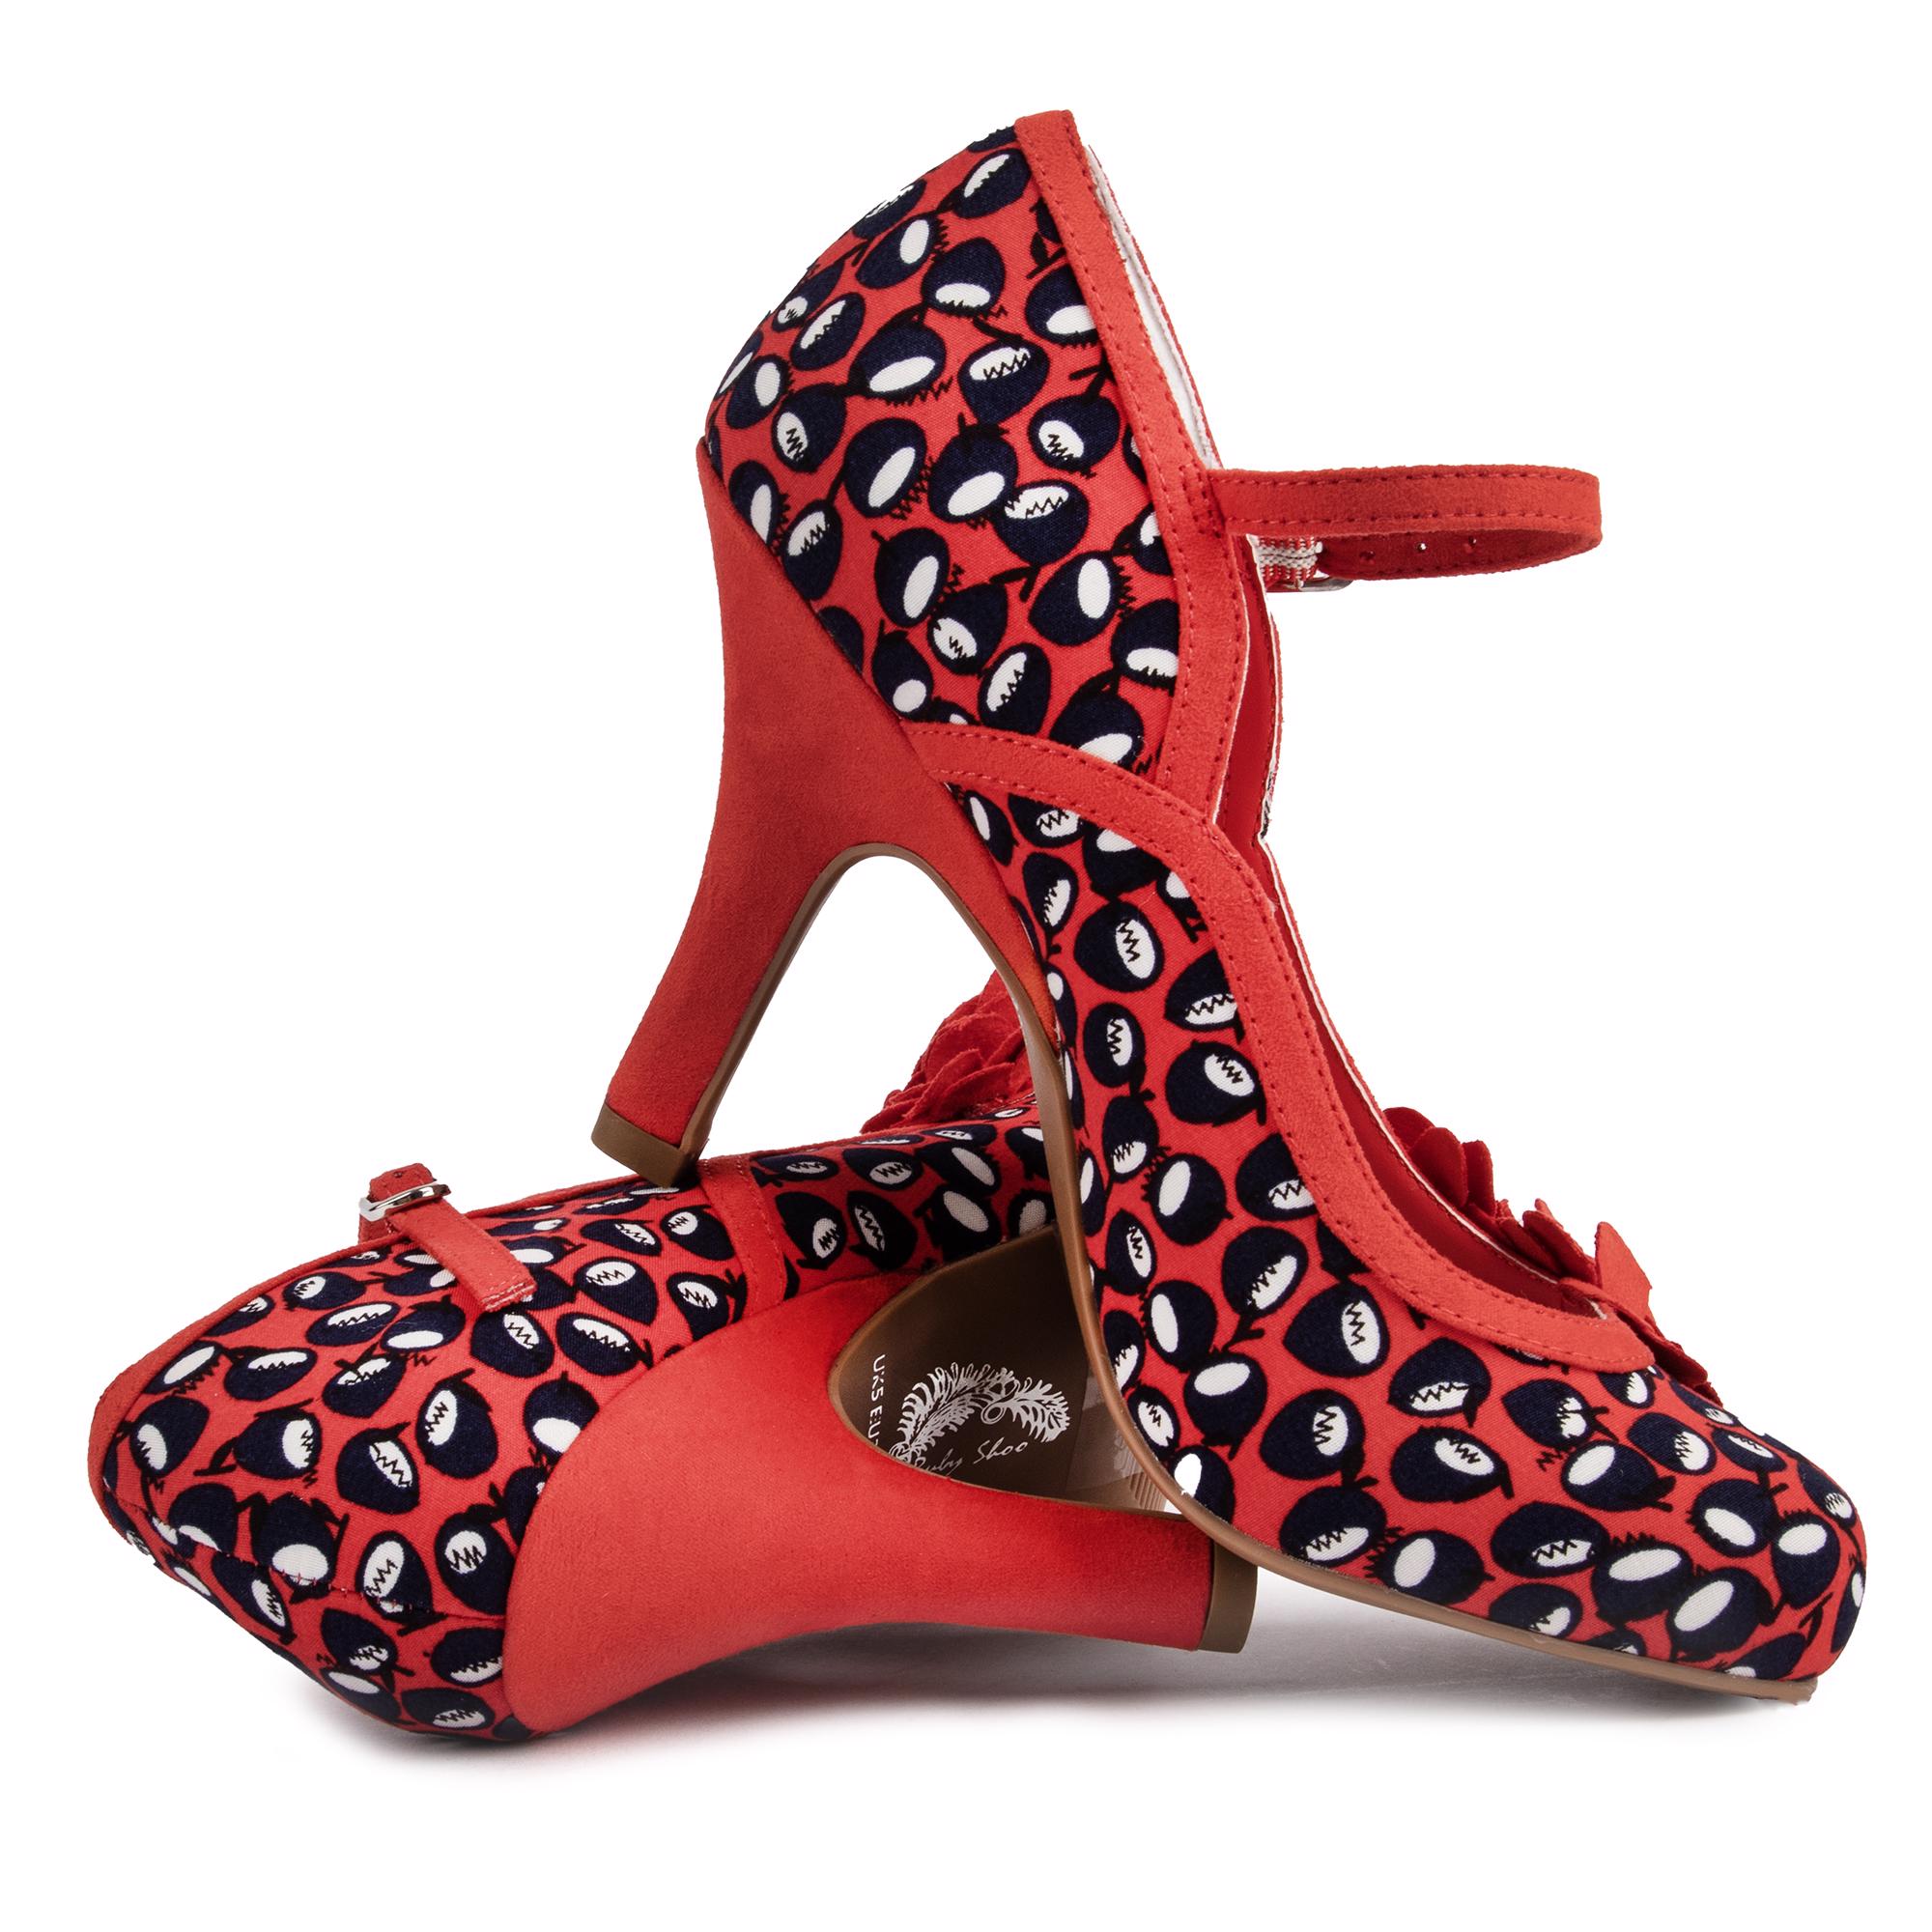 RUBY SHOO Womens Danica Heels Shoes Red